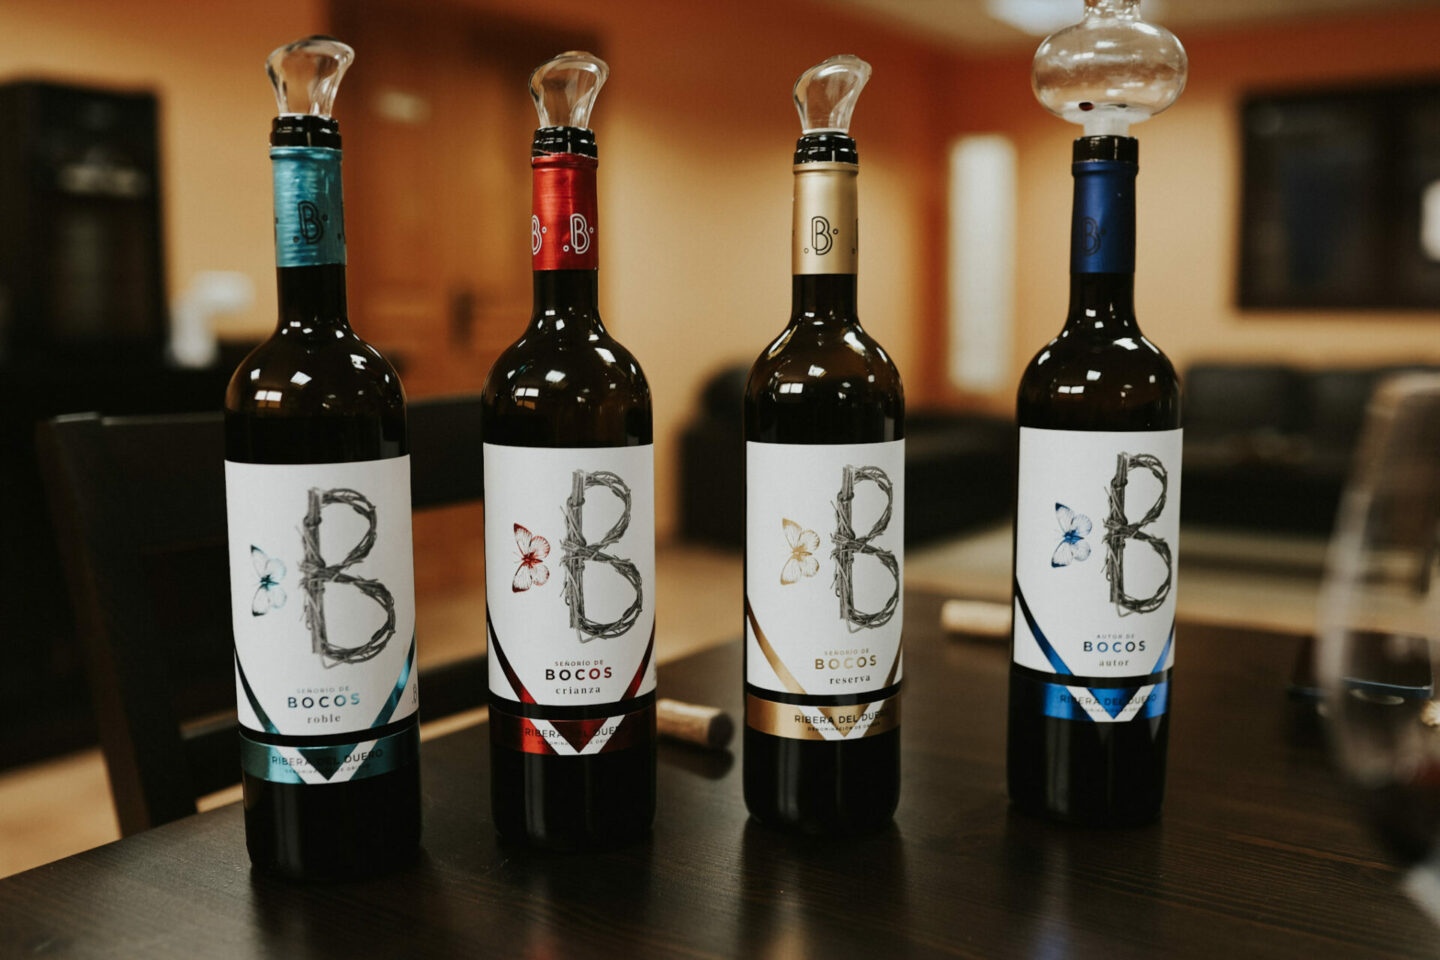 Bodega Bocos wines